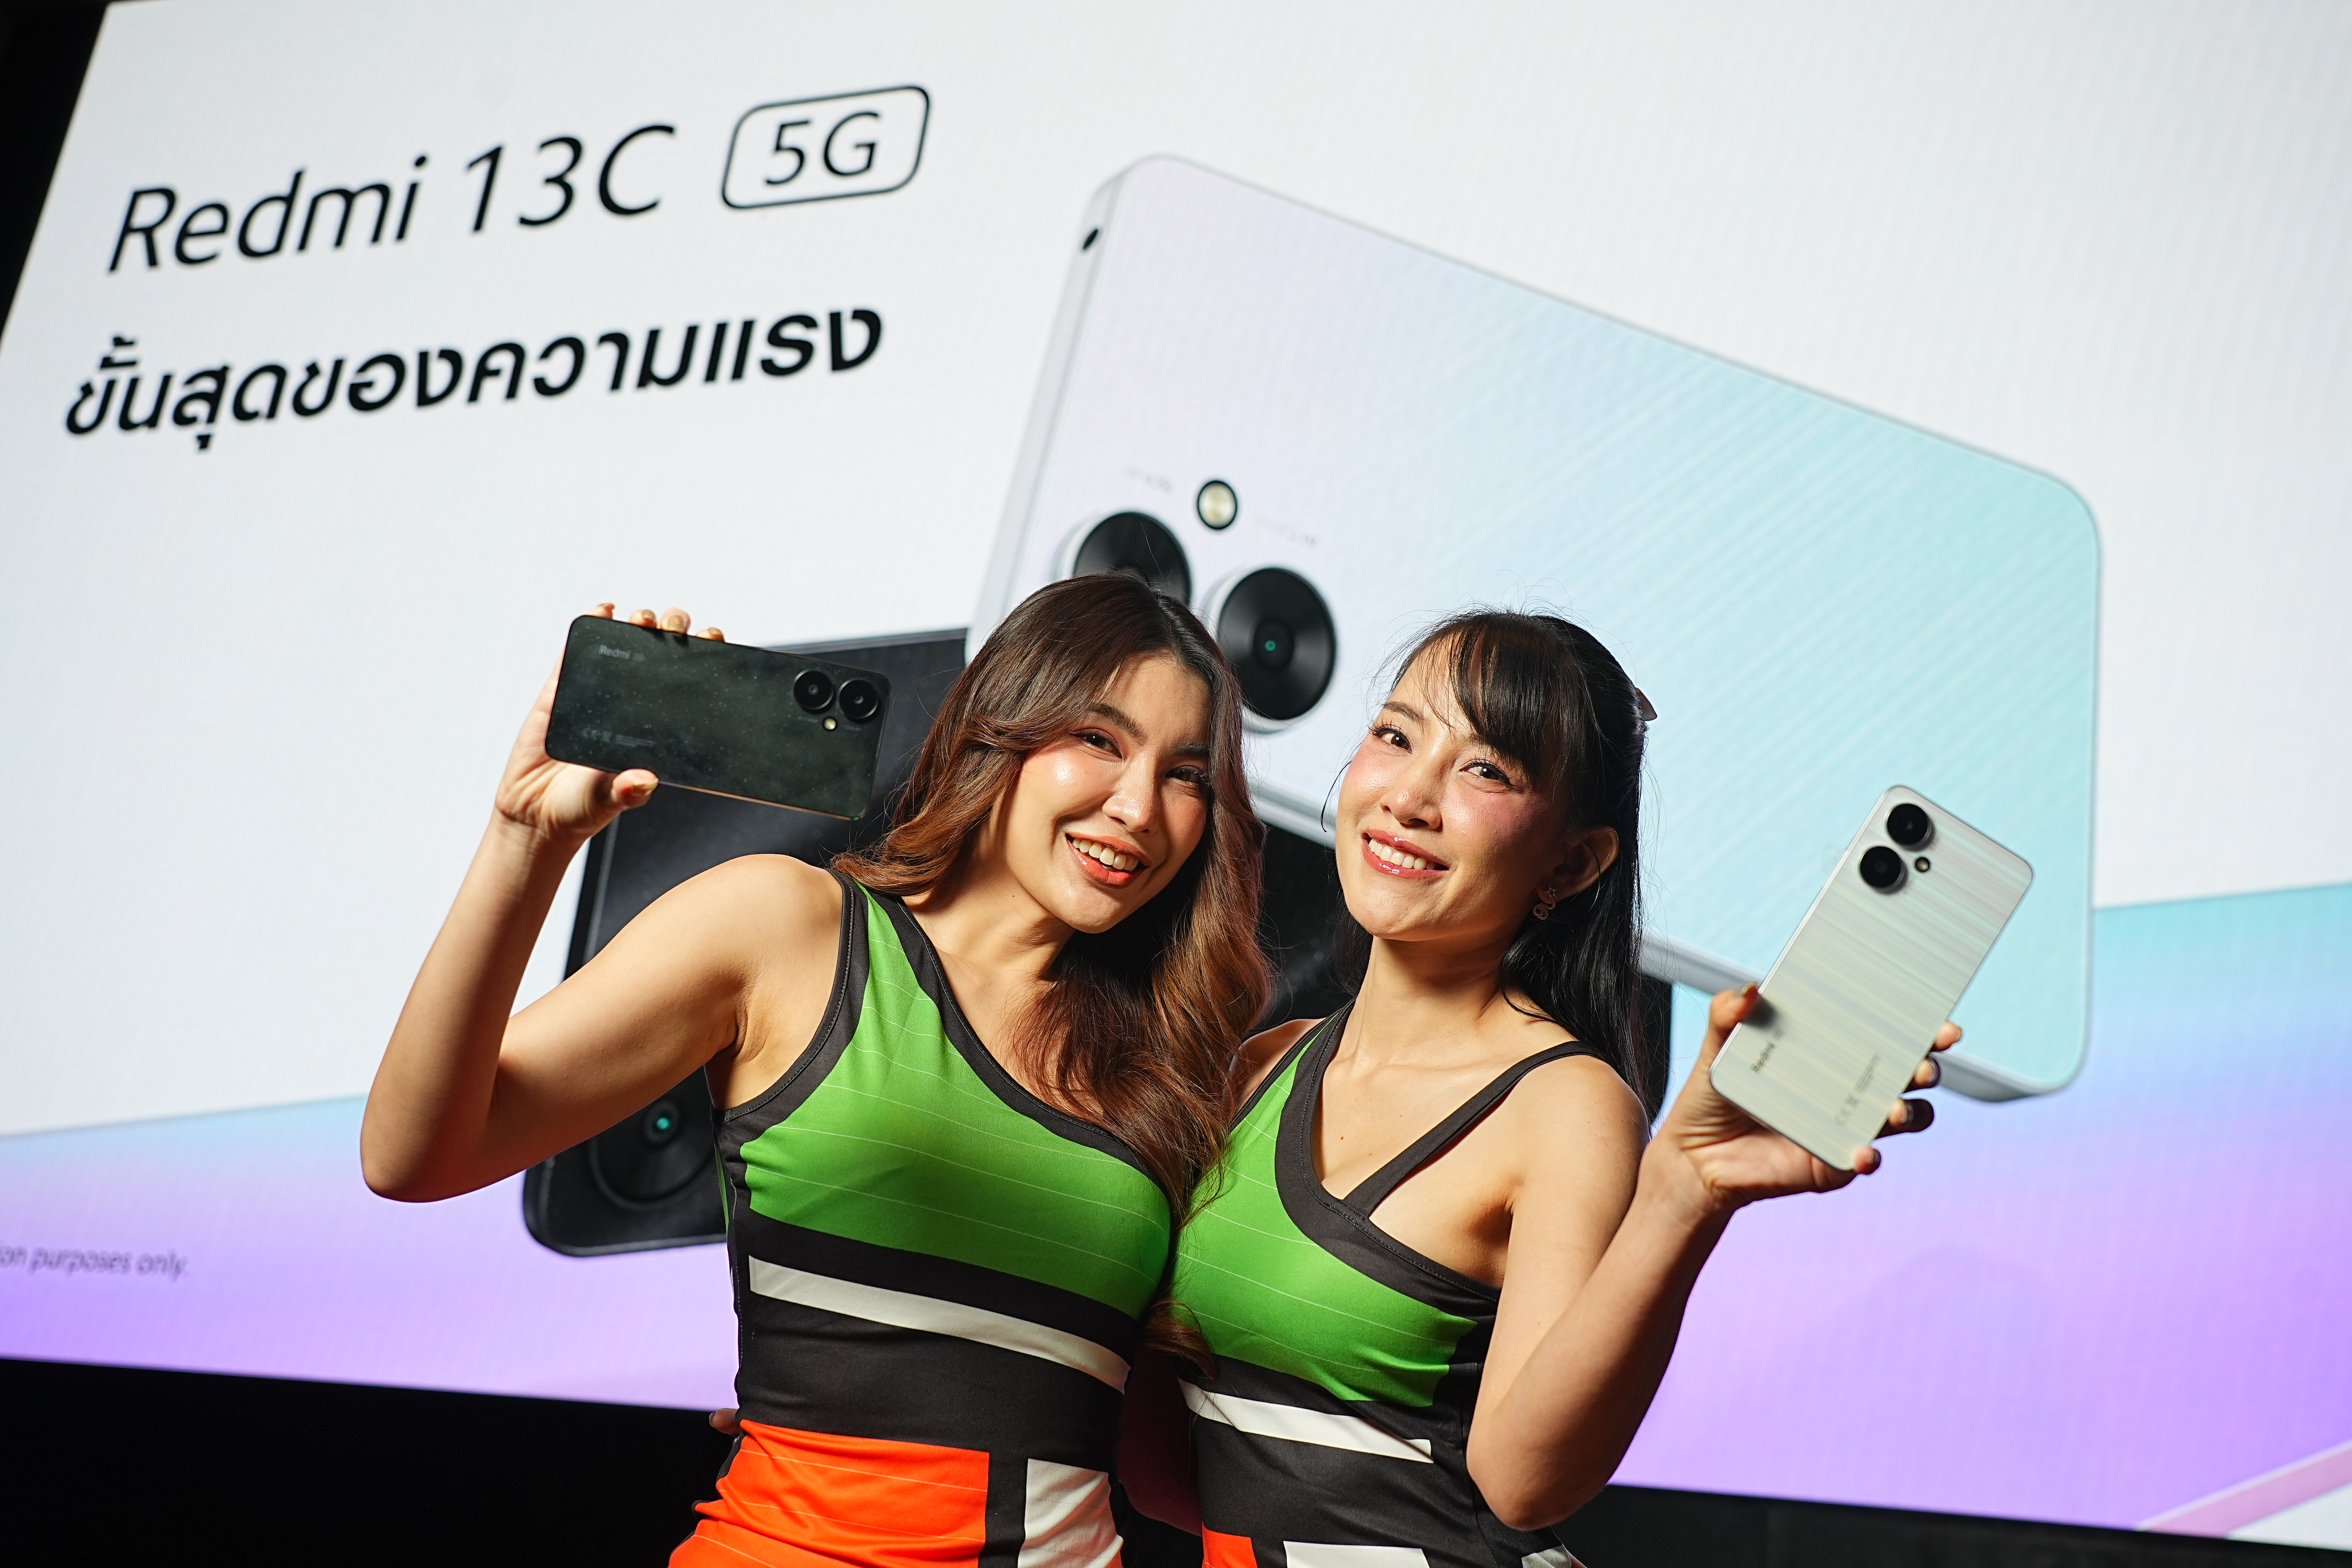 Redmi 13C 5G สมาร์ทโฟนเพื่อความบันเทิงรอบด้าน วางจำหน่ายในไทยอย่างเป็นทางการในราคาเริ่มต้นเพียง 4,999 บาท